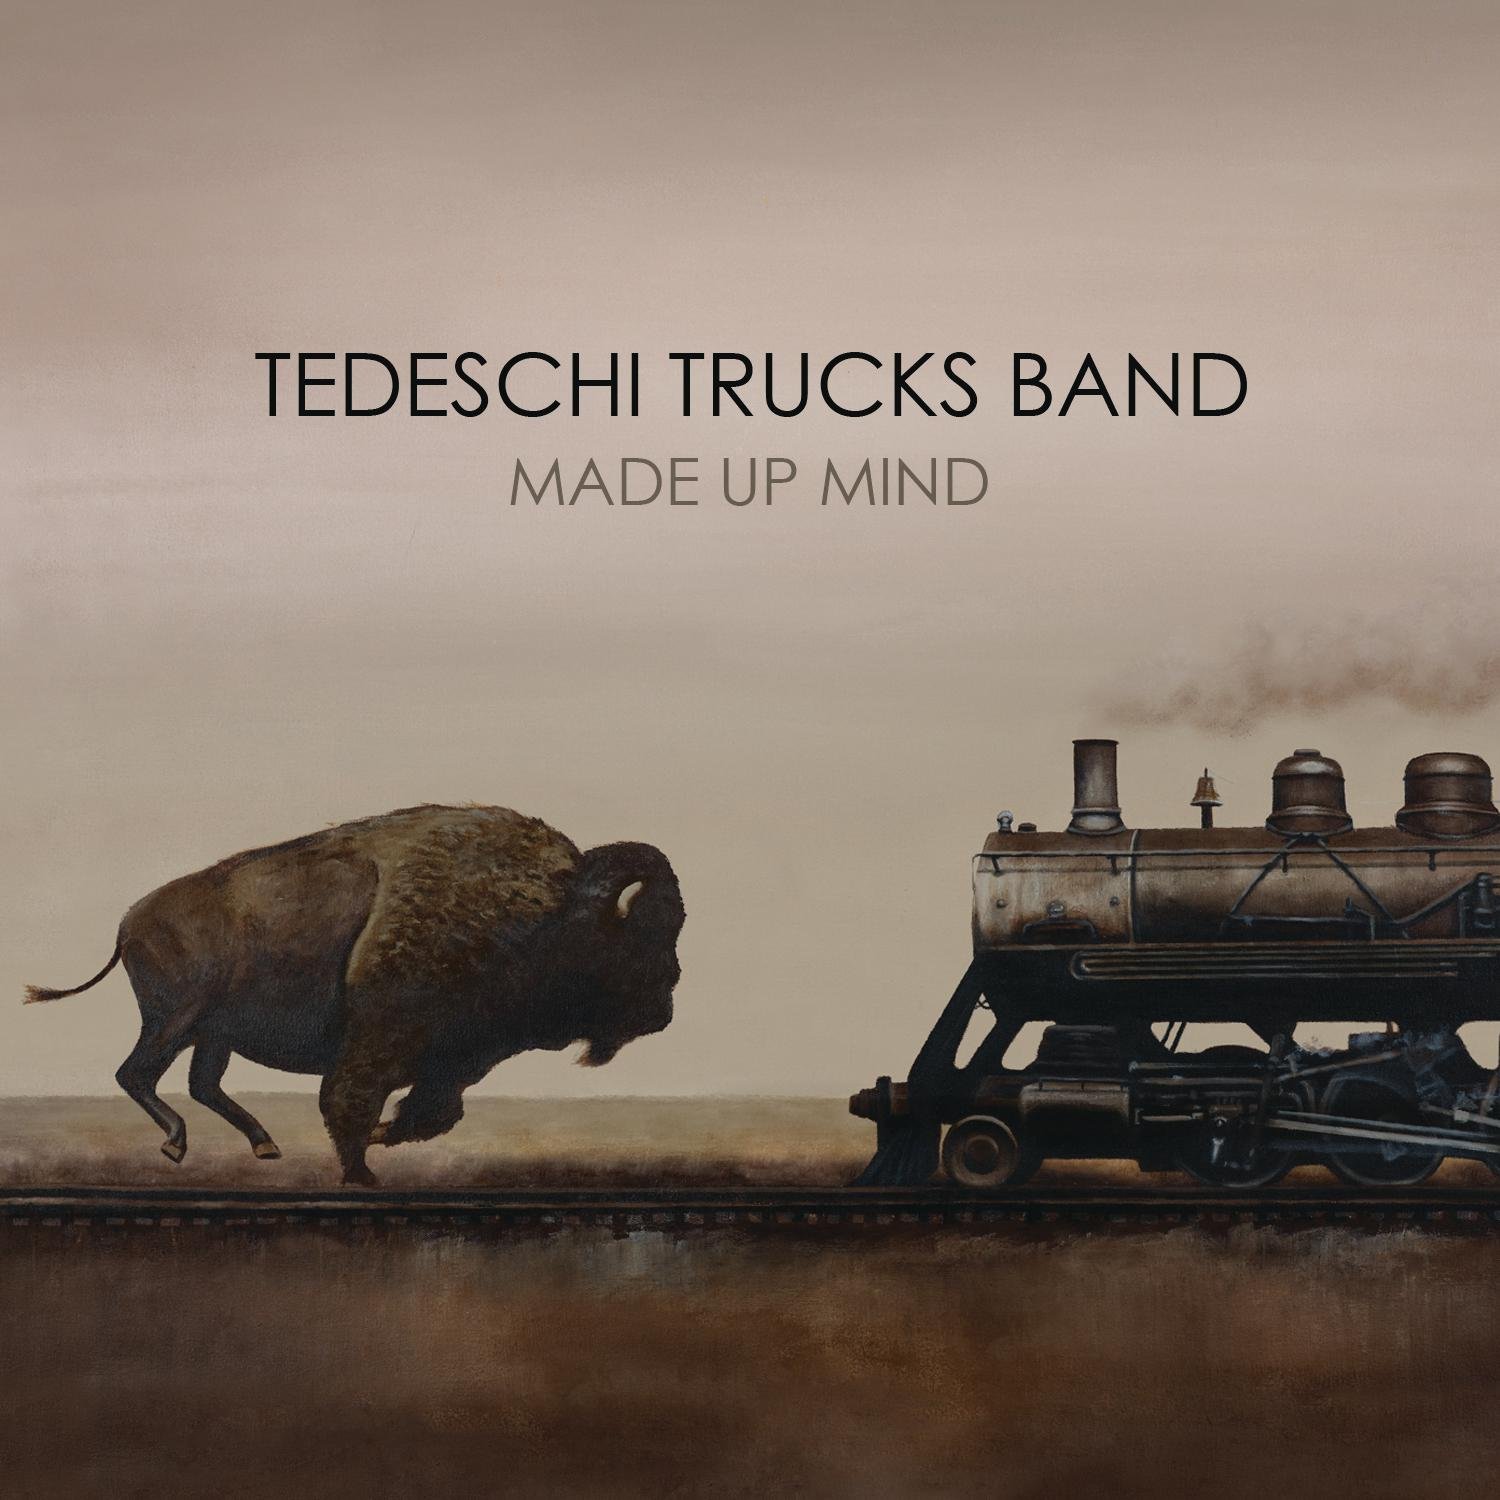 Tedeschi Trucks Band: The Chosen Ones - American Songwriter